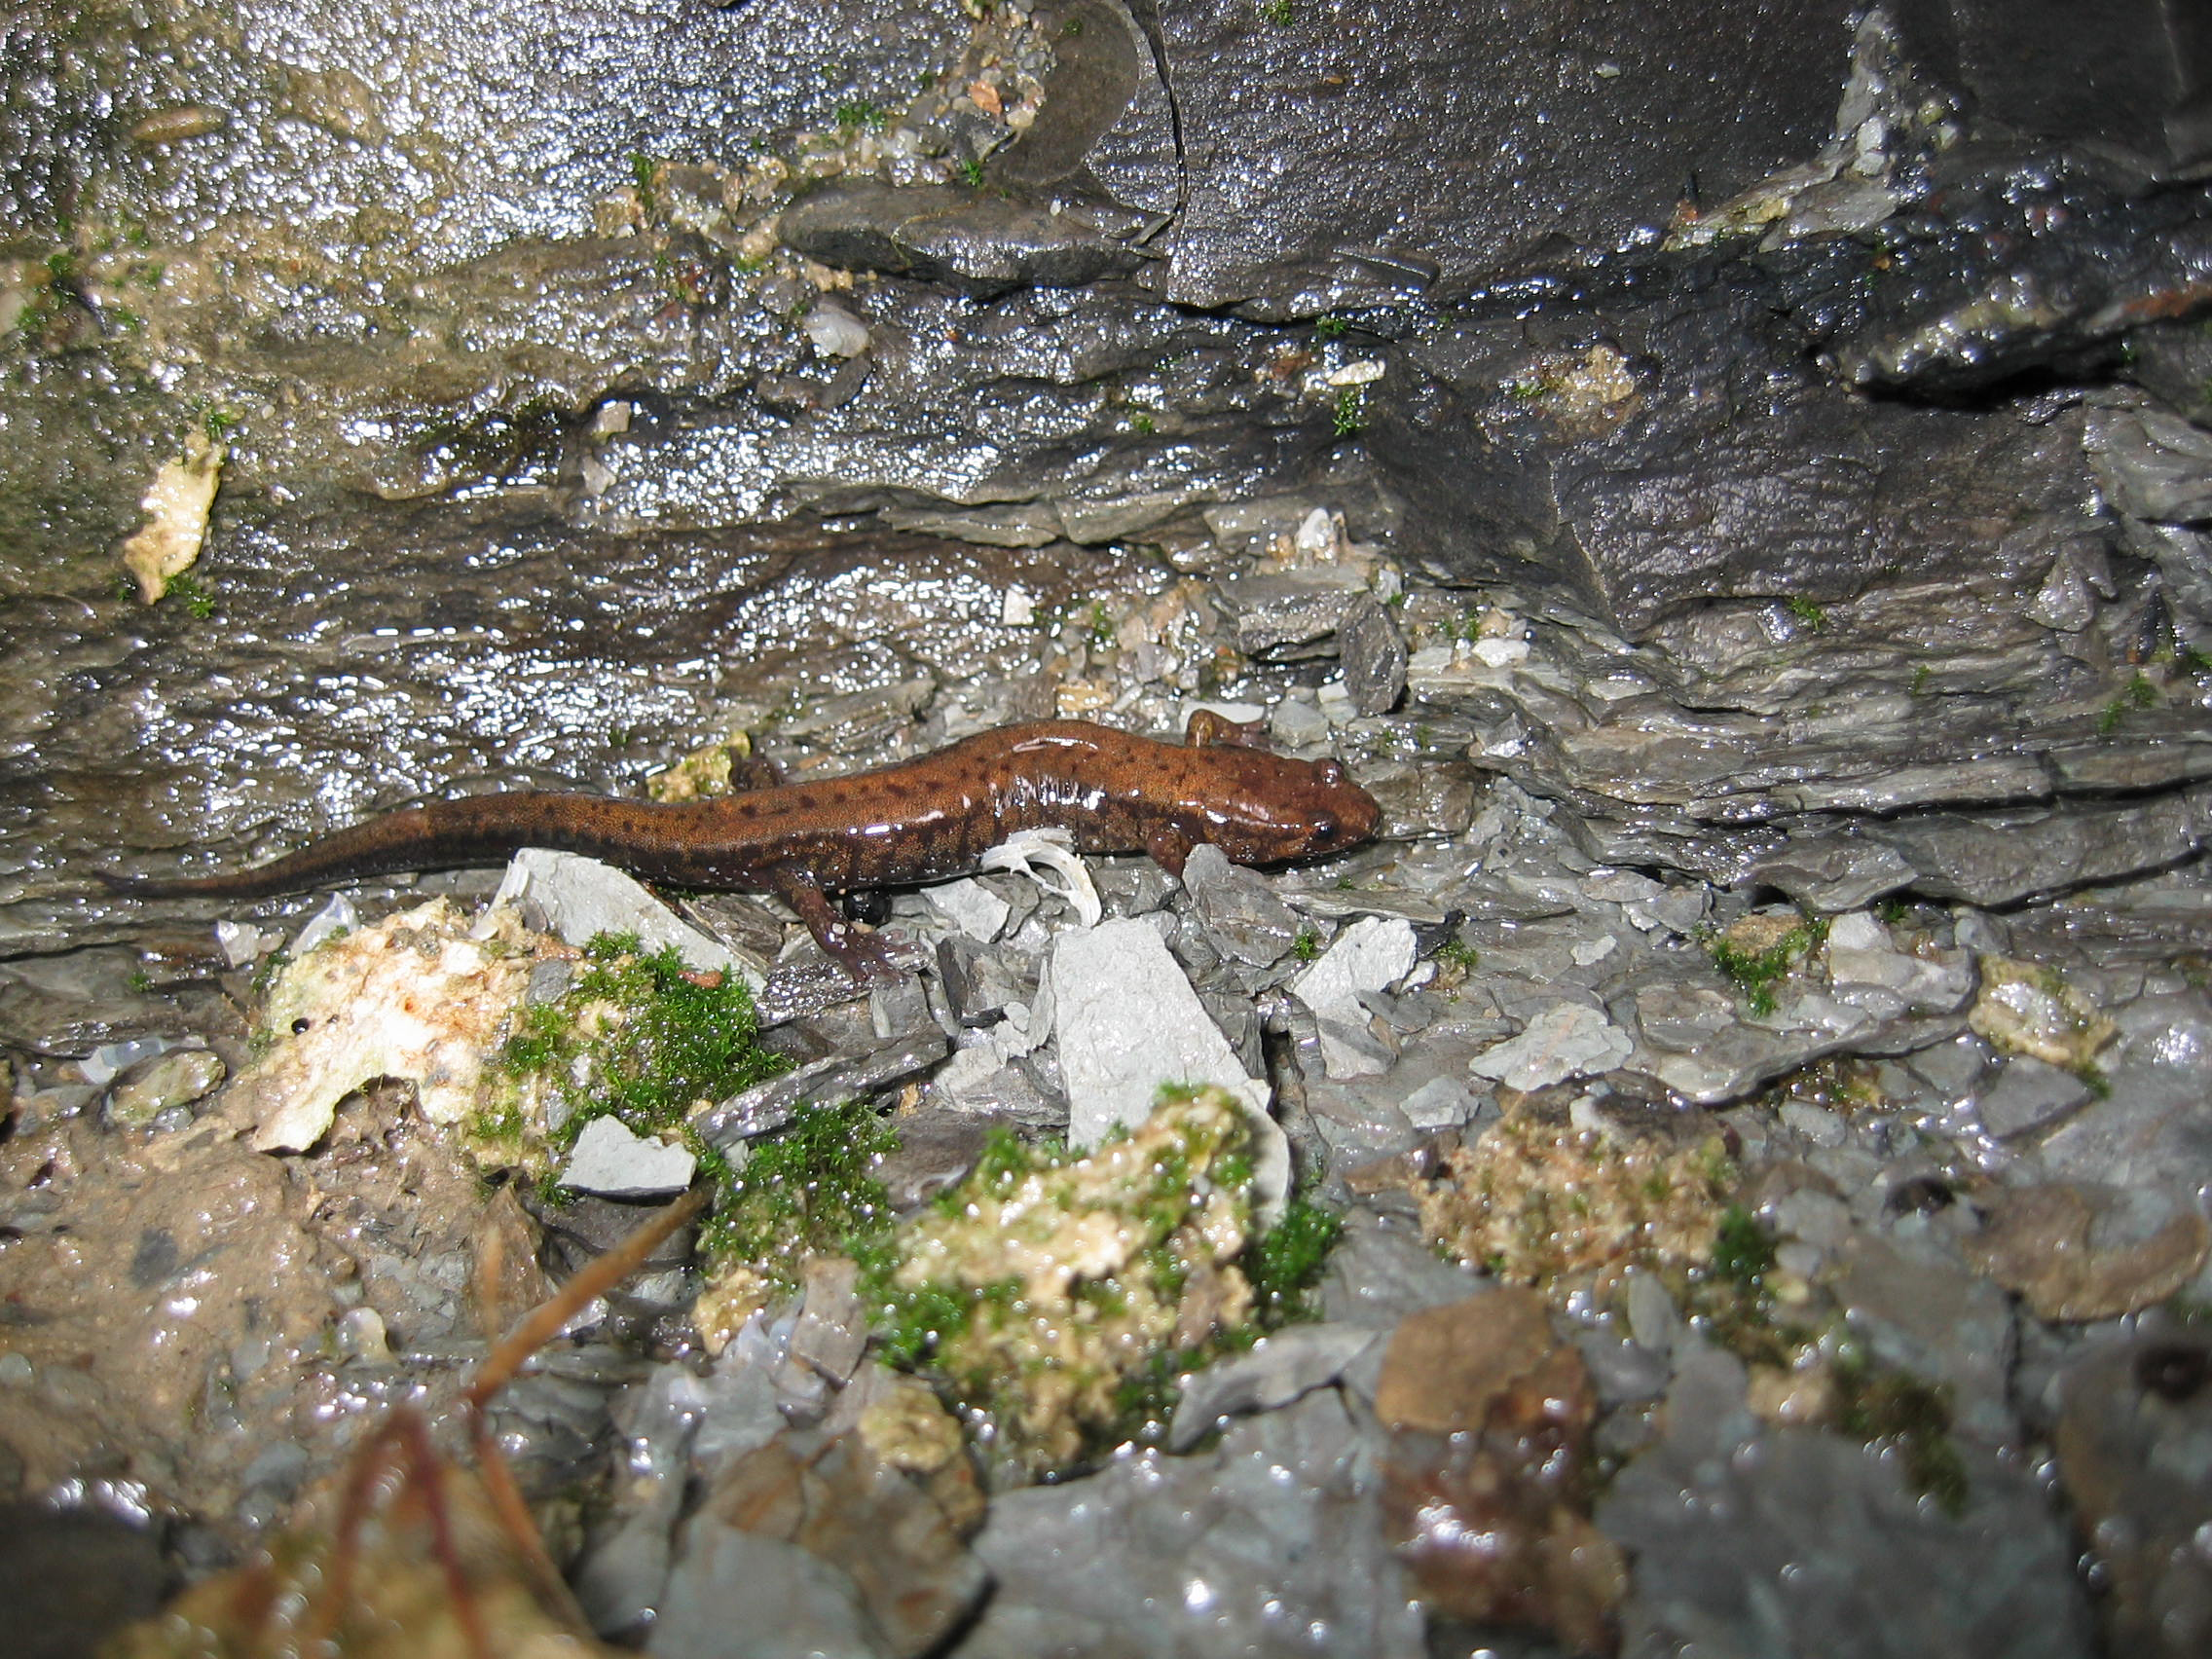 A photograph of an Allegheny Mountain Dusky Salamander